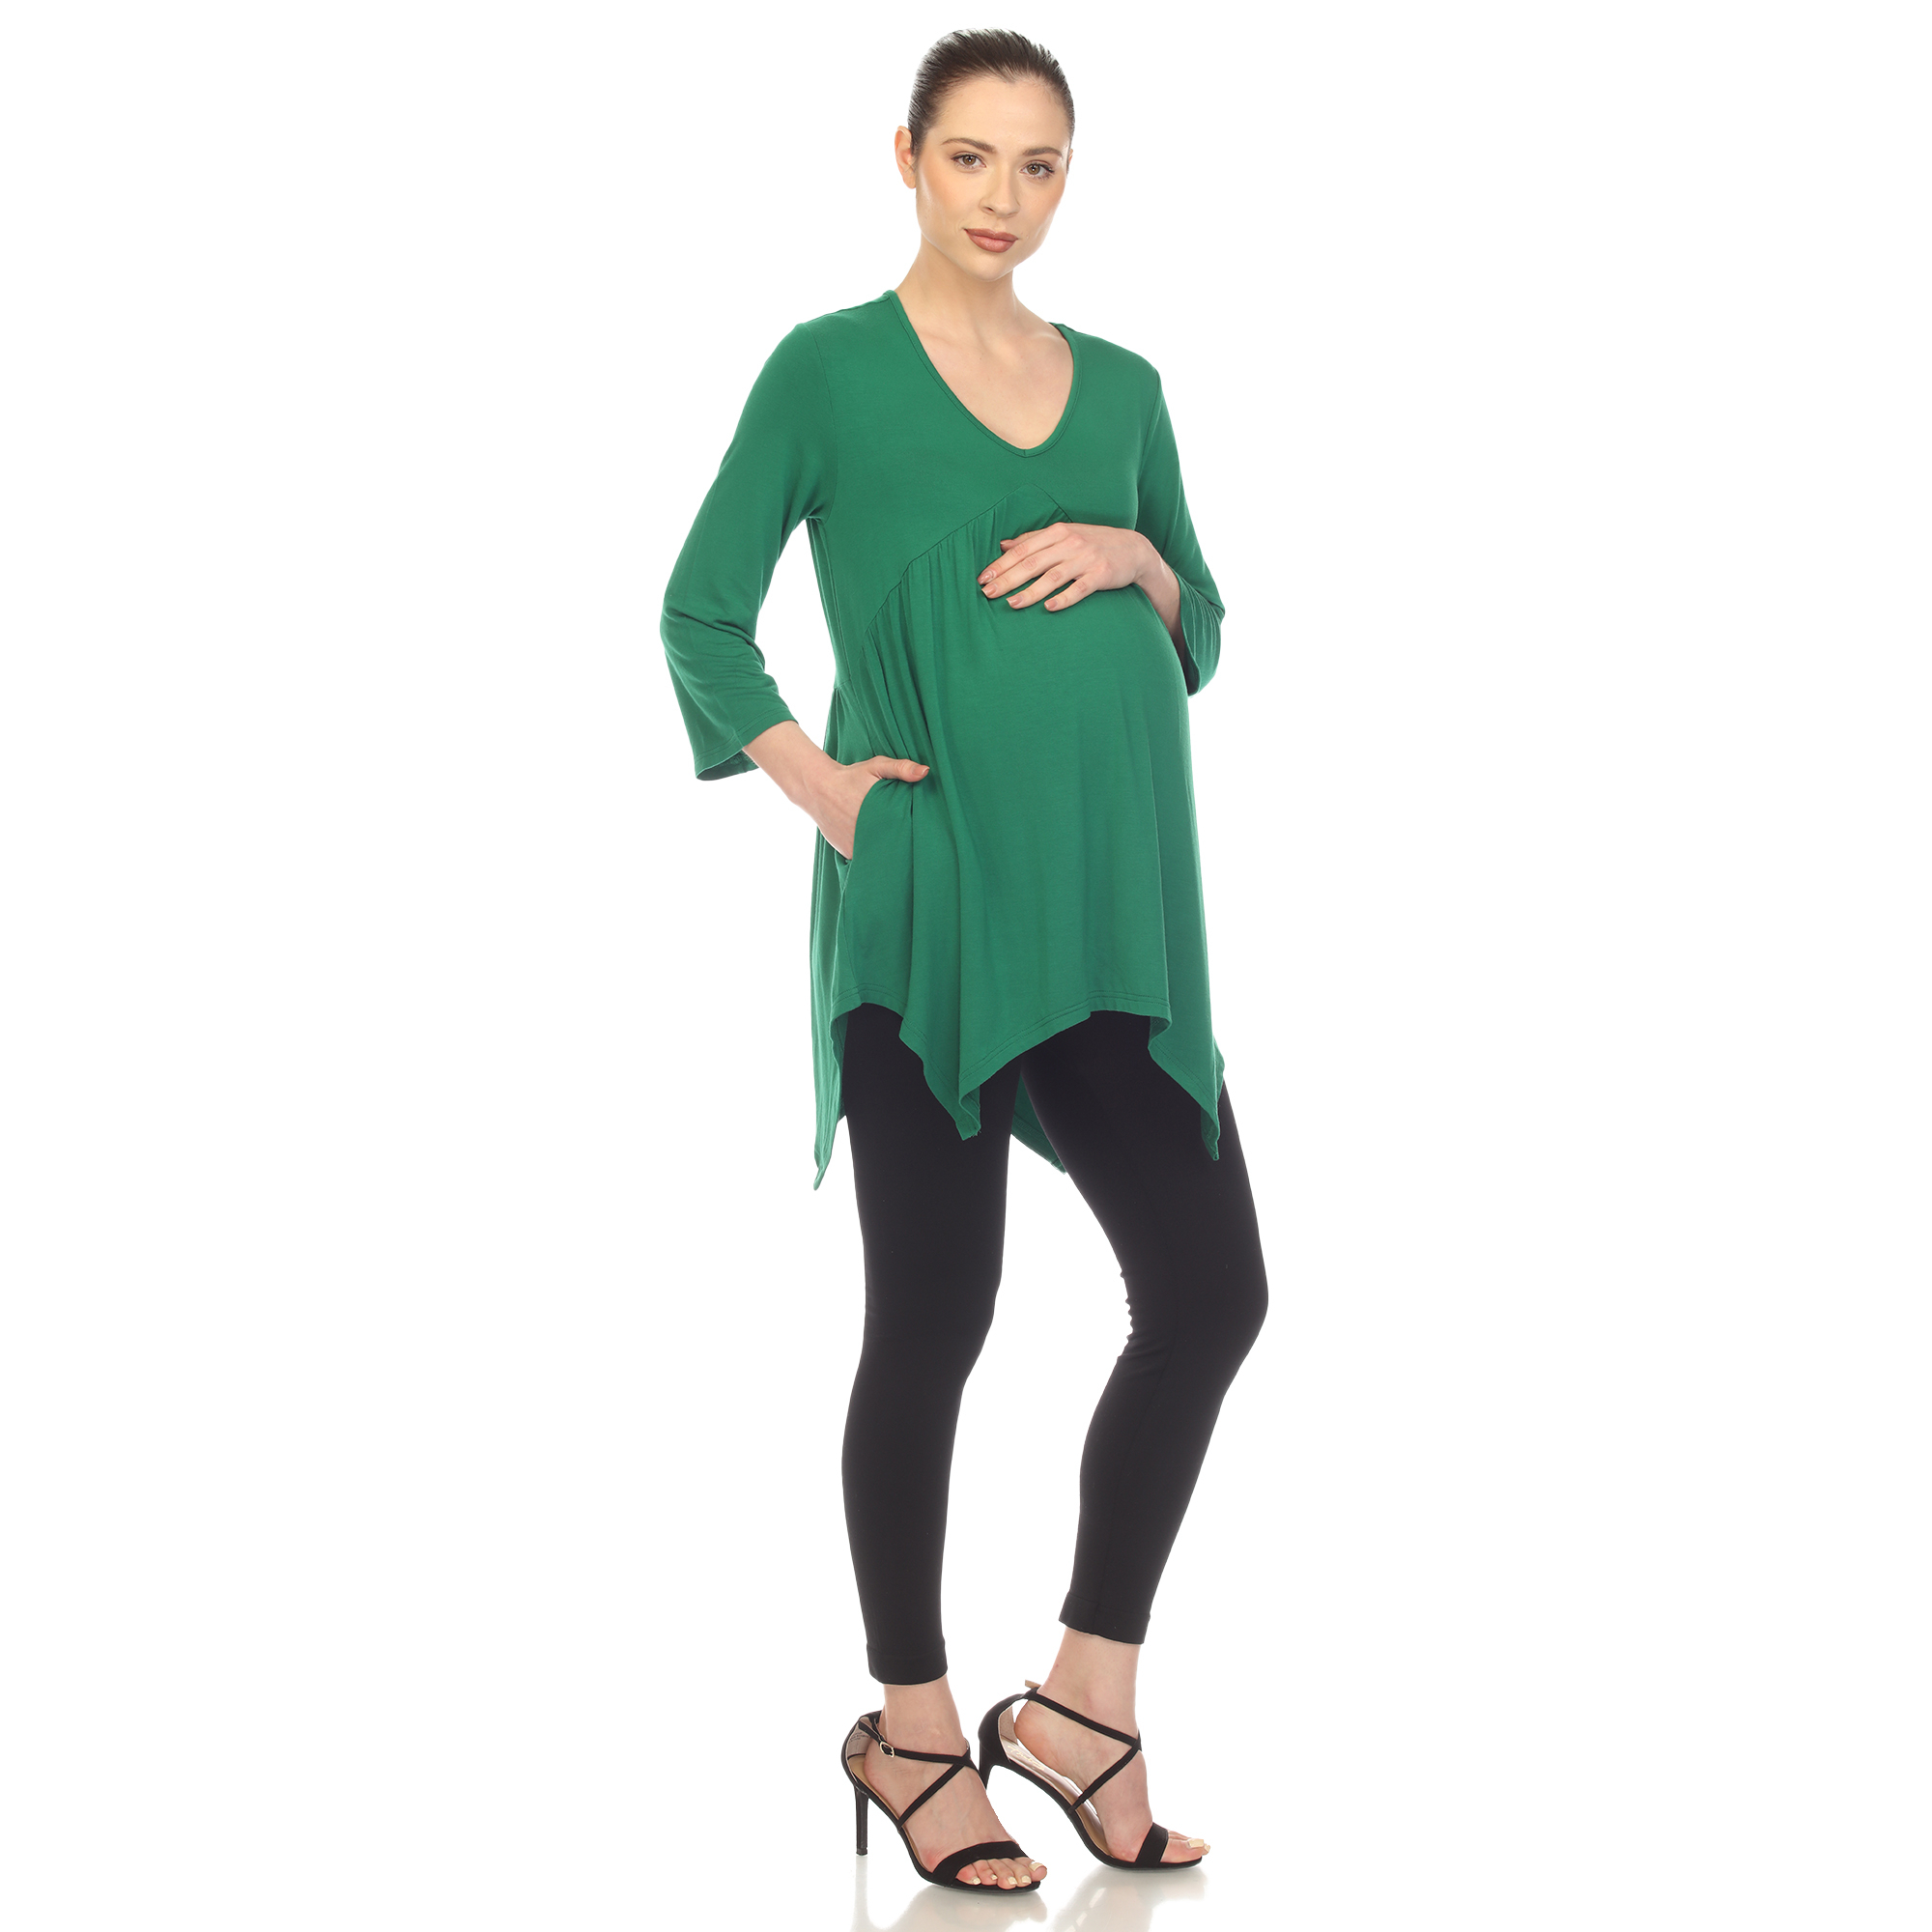 White Mark Women's Maternity Empire Waist V-Neck Tunic Top - Green, Small